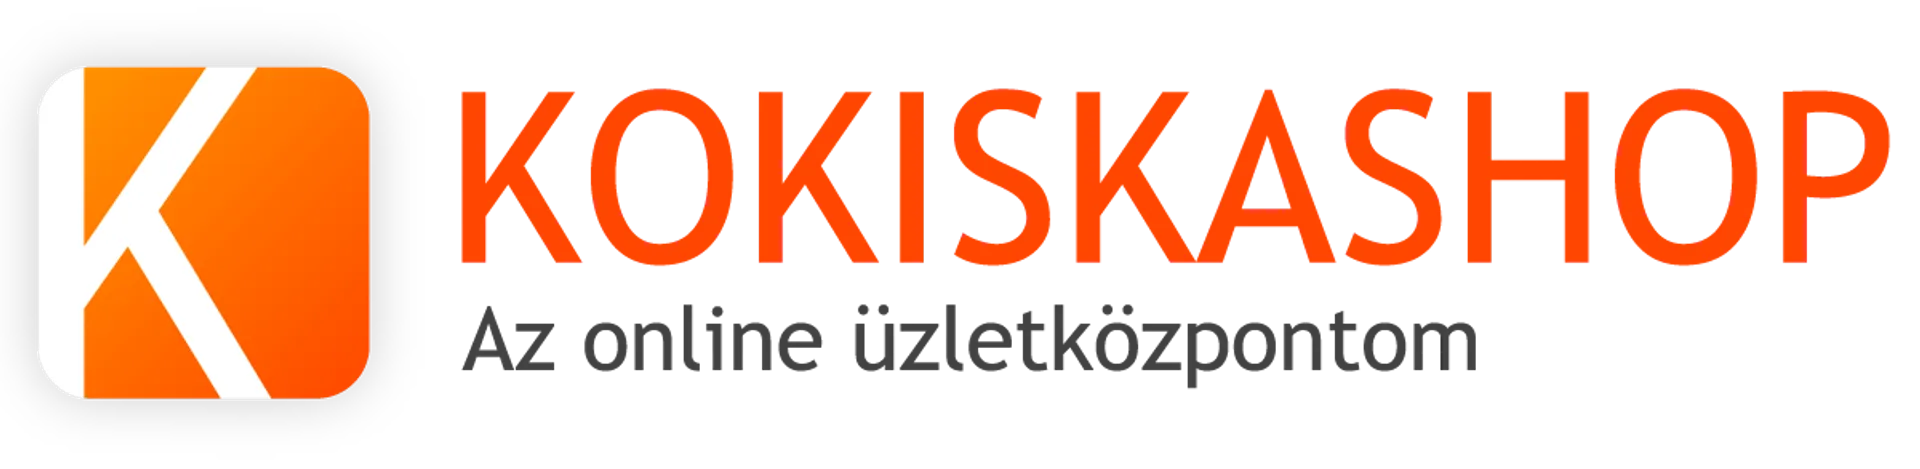 KOKISKASHOP logo